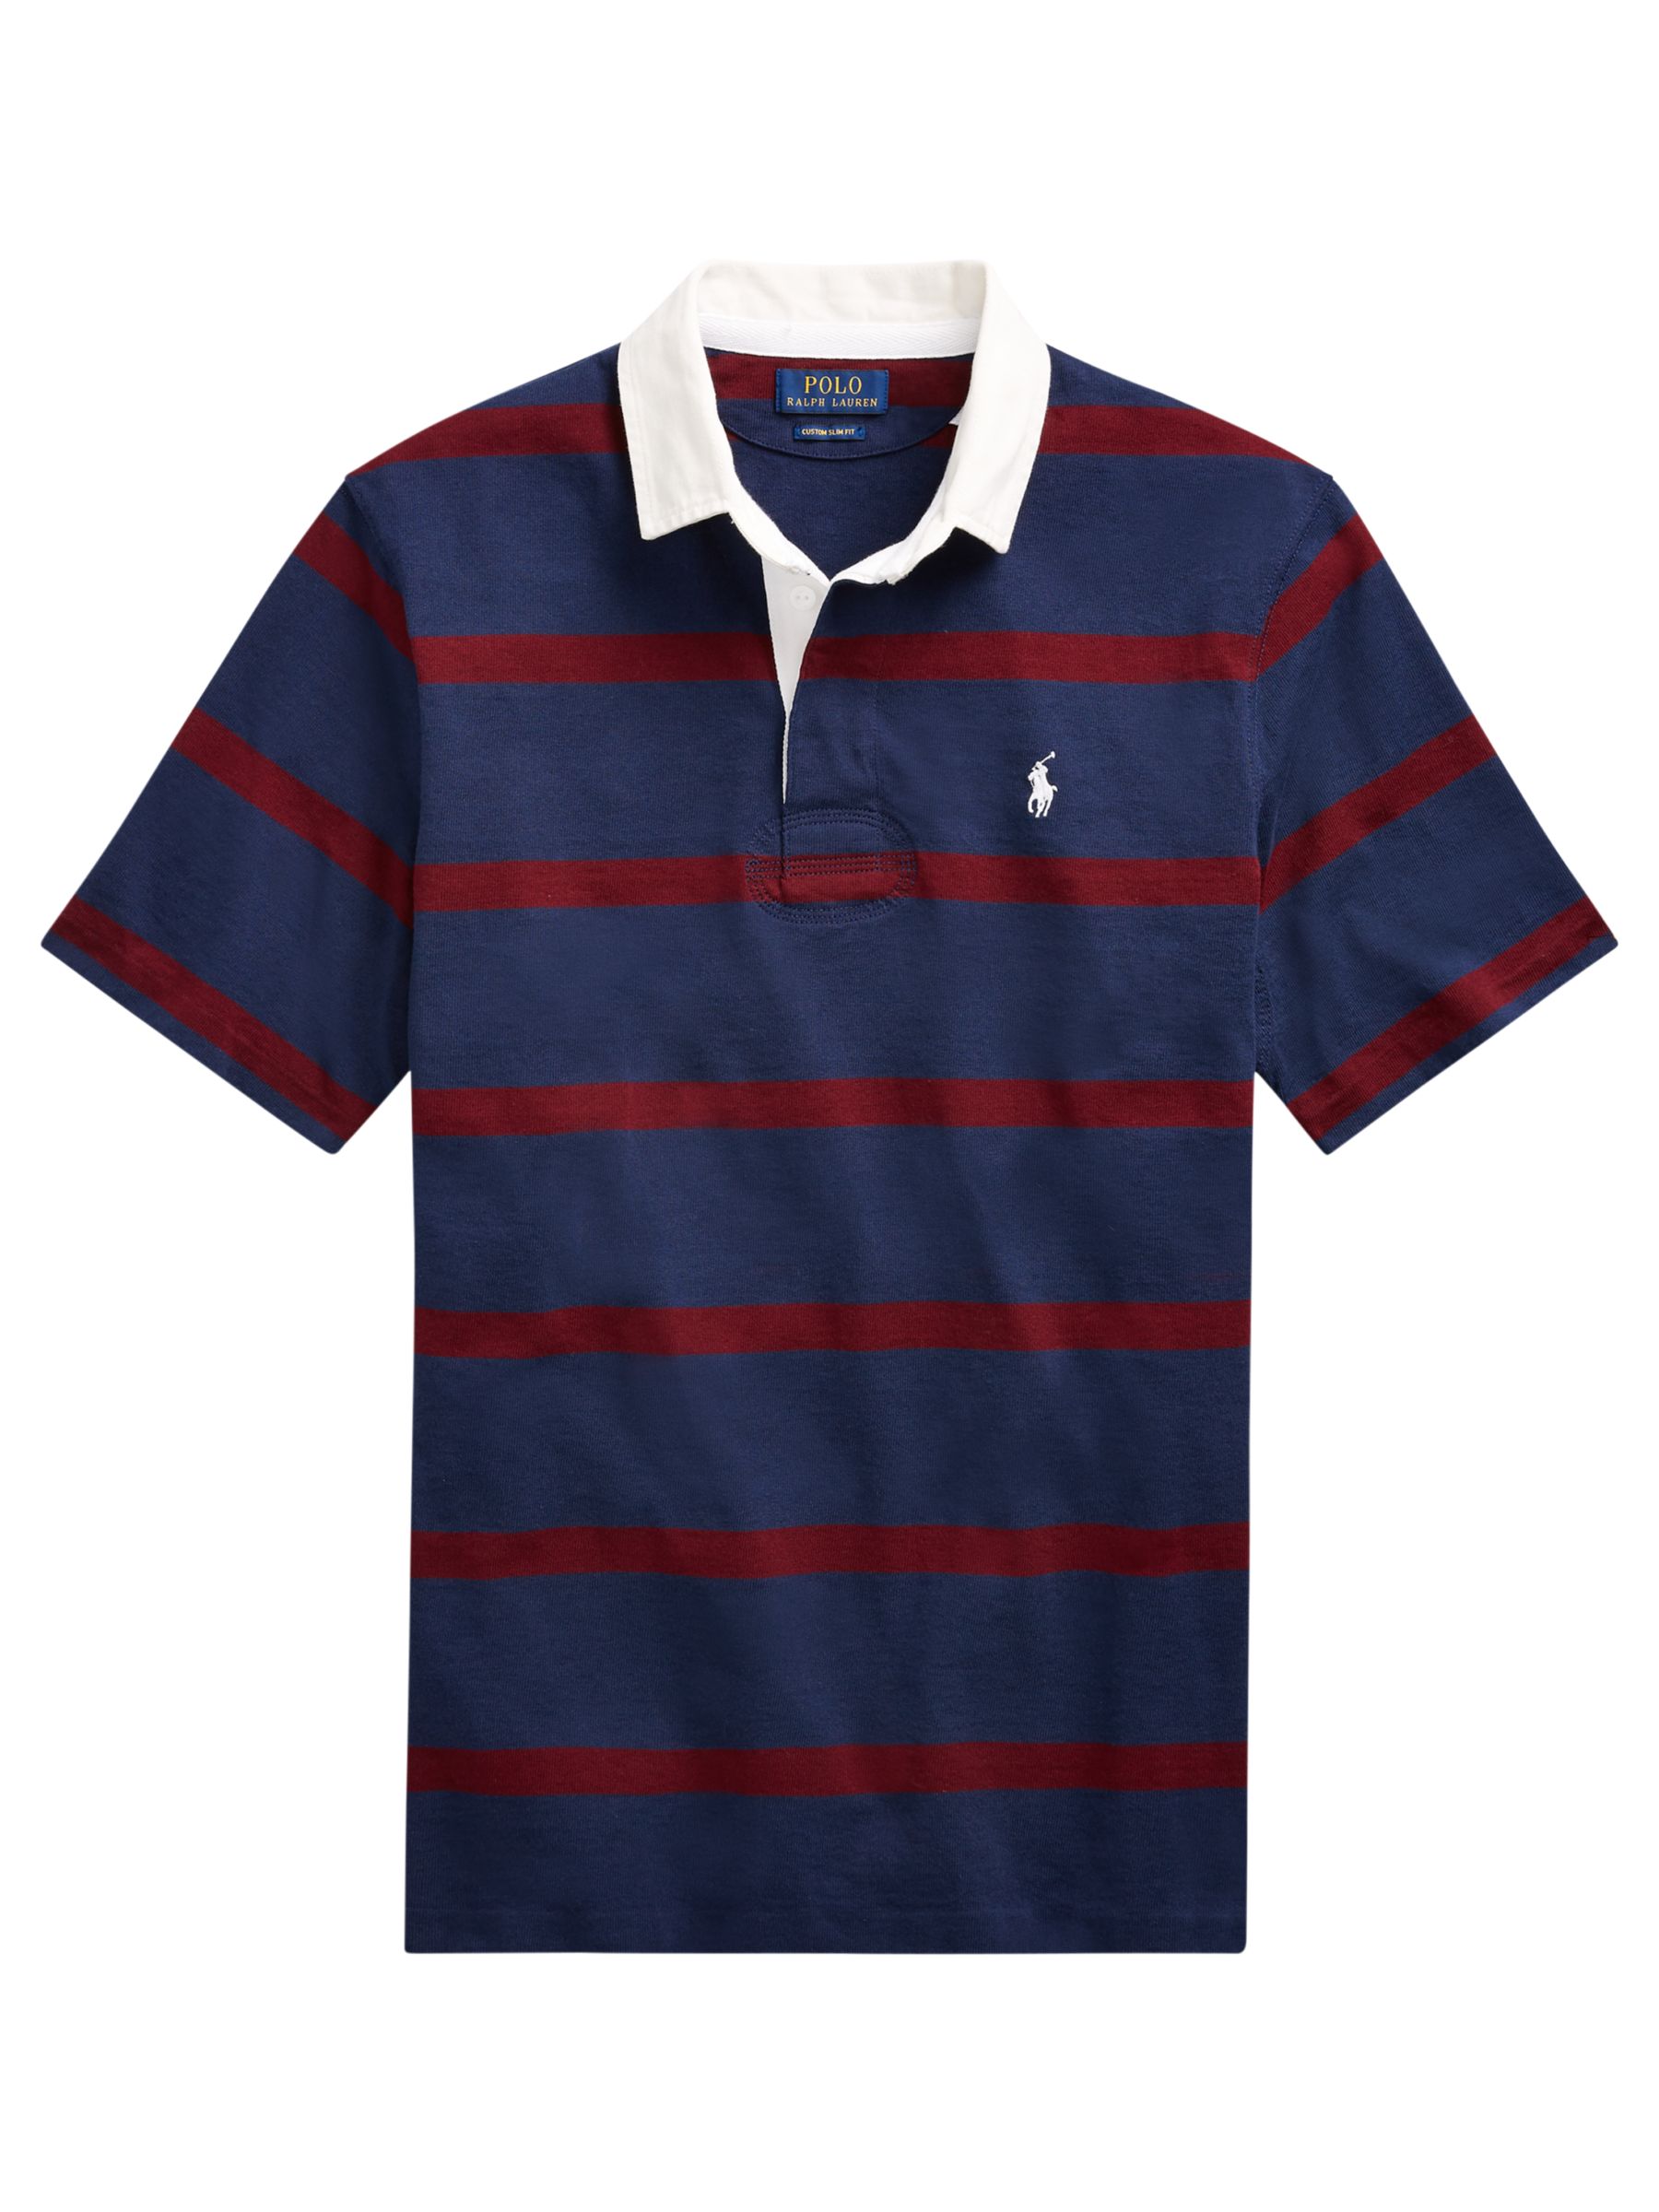 Polo Ralph Lauren Short Sleeve Stripe Rugby Shirt, Newport Navy/Wine at ...